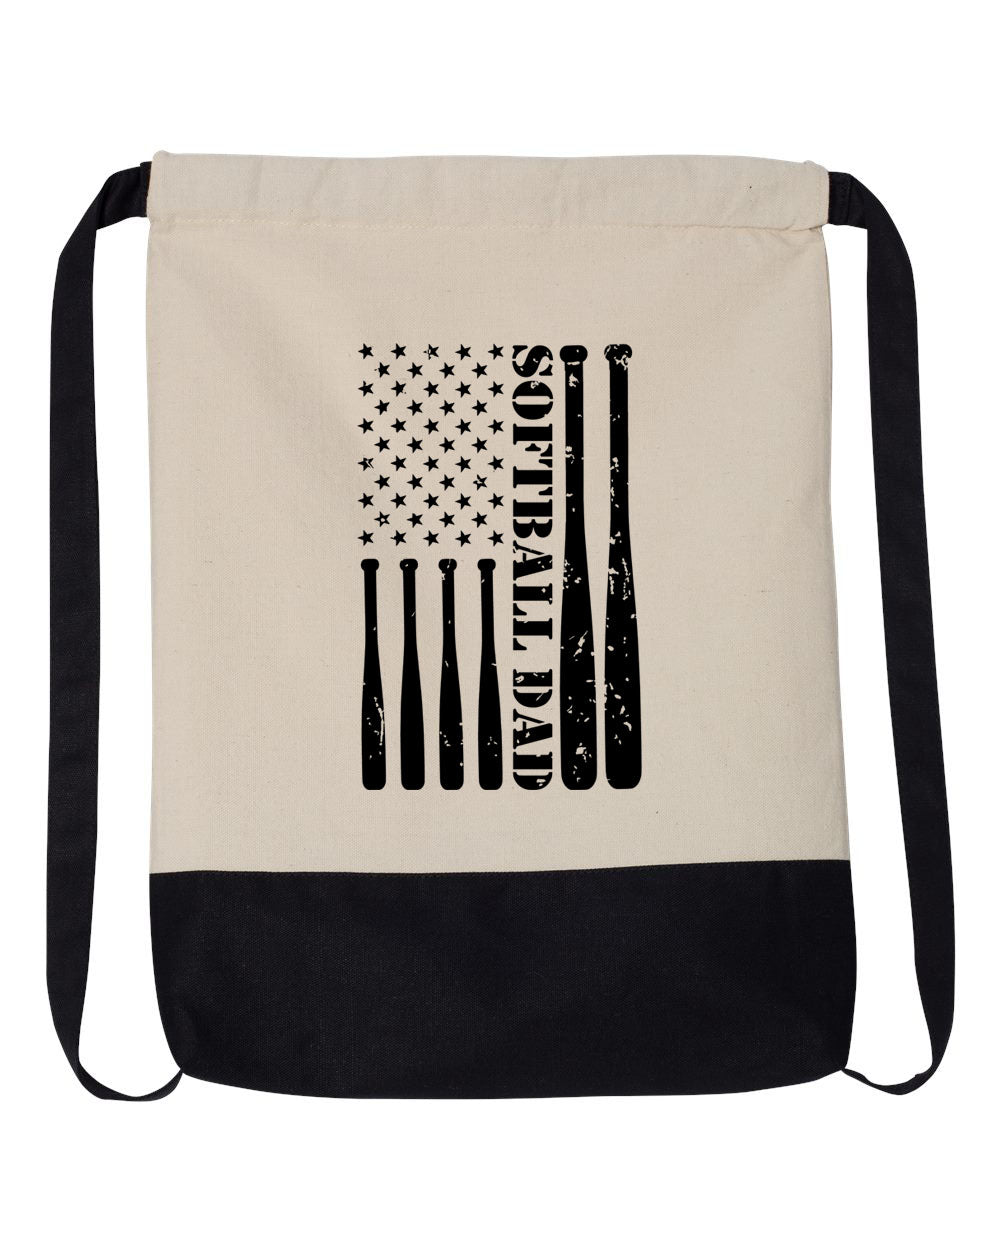 High Point Softball Design 5 Drawstring Bag